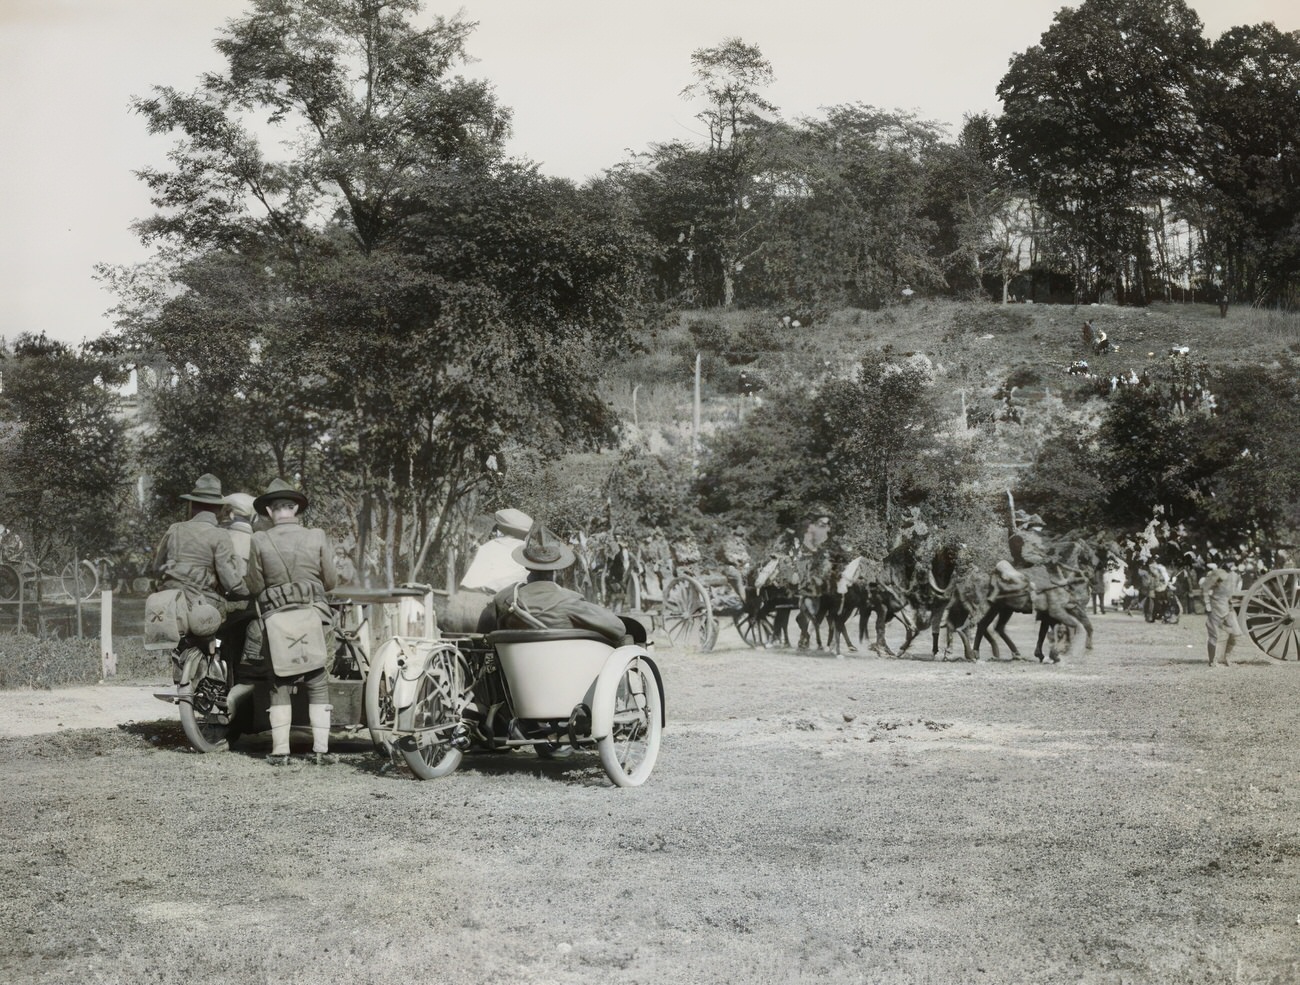 Troops With Motorbike In Van Cortlandt Park, Circa 1915.